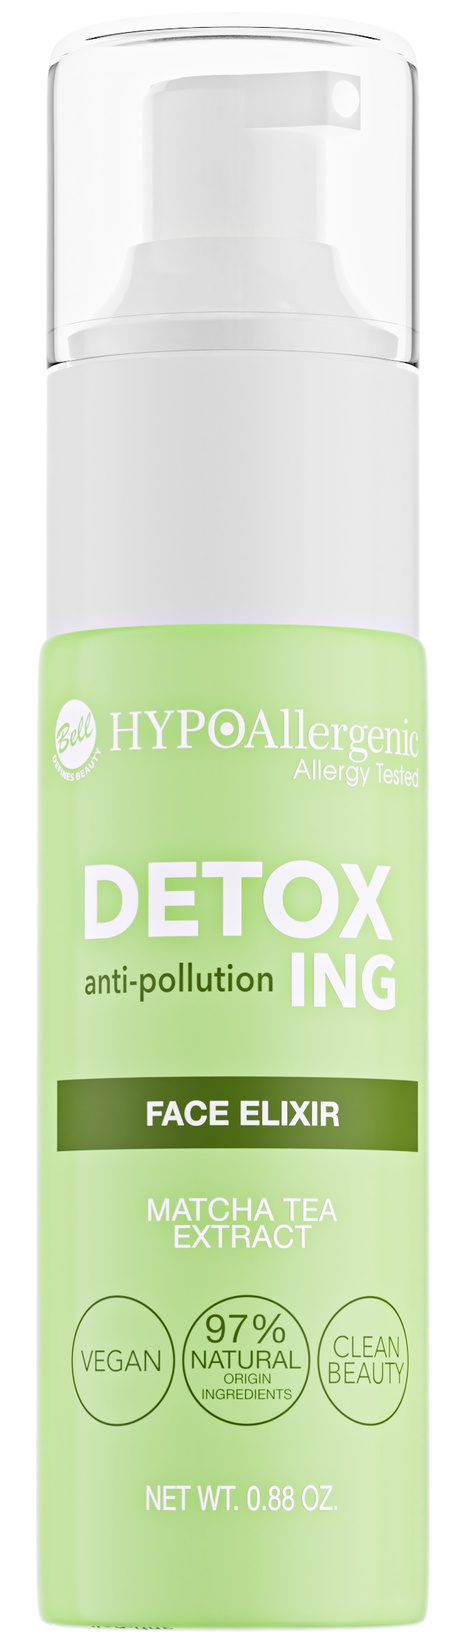 Bell HYPOAllergenic Detoxing Anti-Pollution Face Elixir